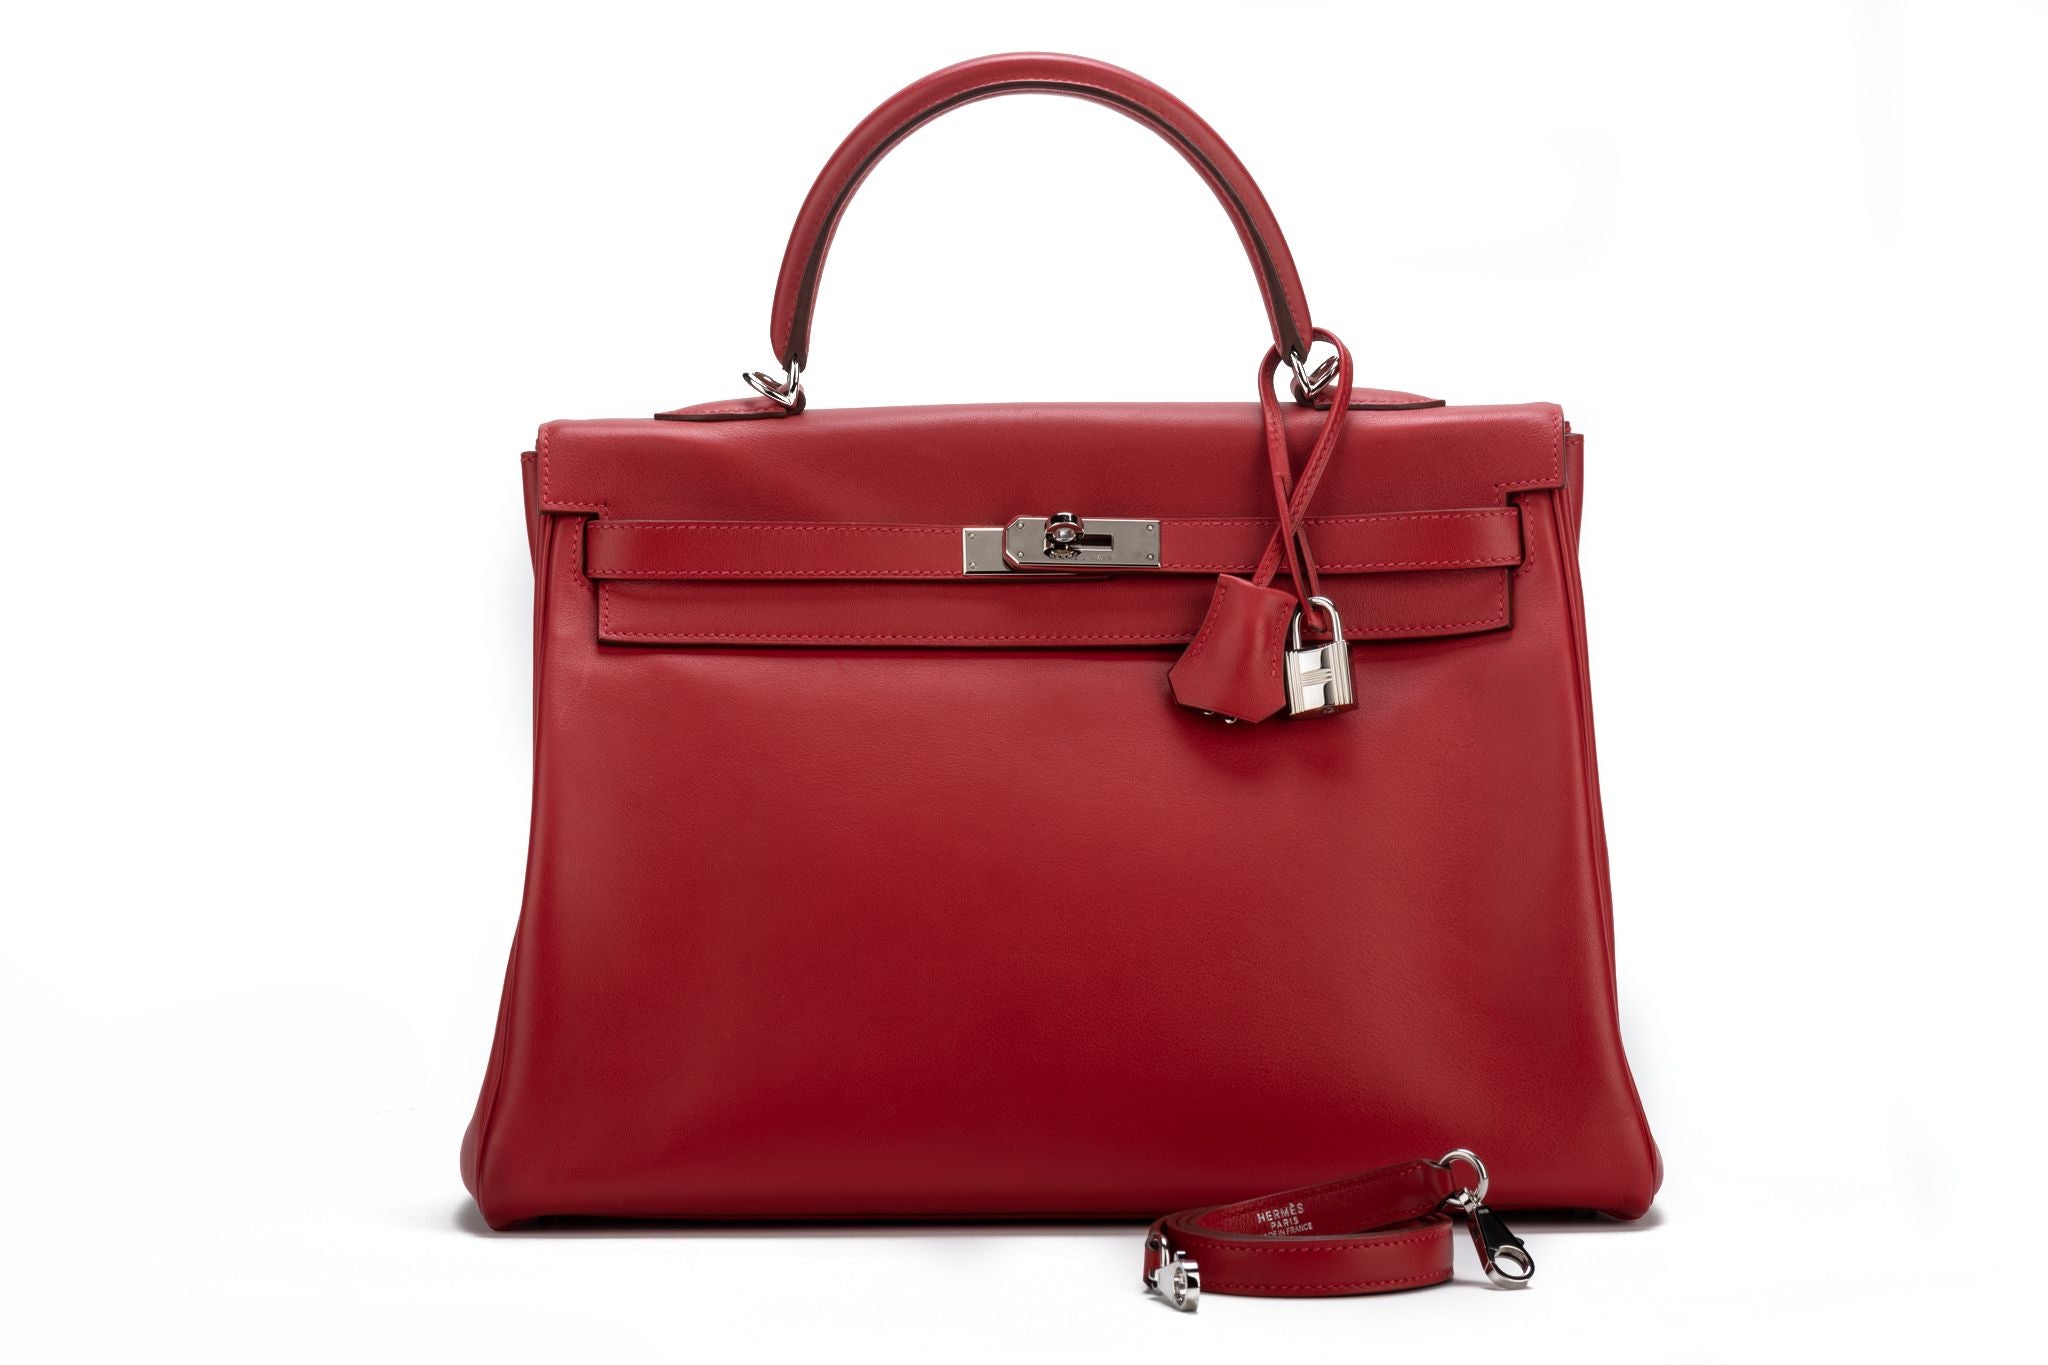 HERMES Birkin 35 Handbag Red Swift Leather